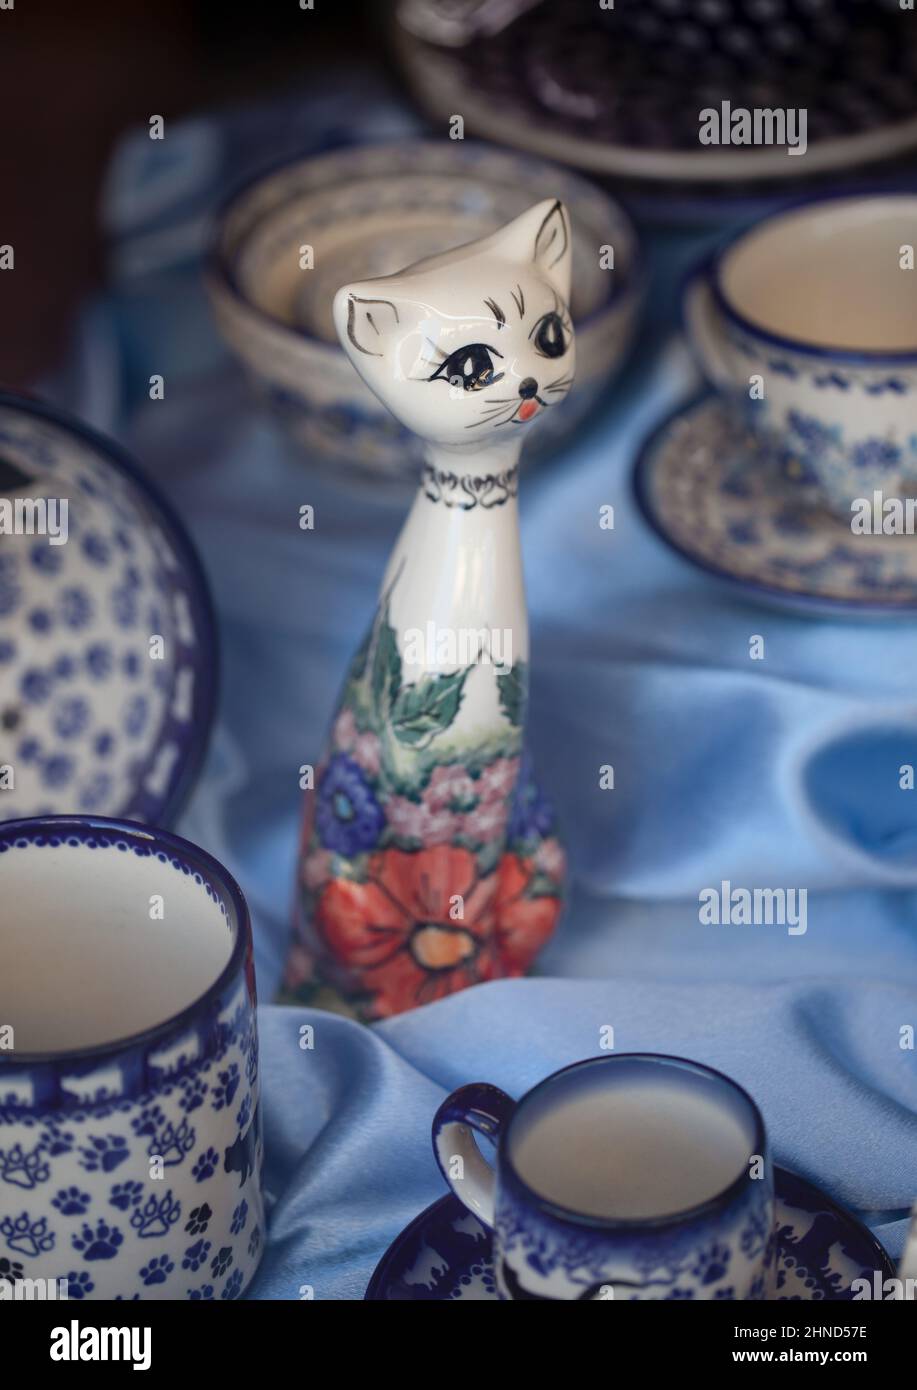 Polish pottery, Coffe time, colorful mugs, ceramics. Stock Photo